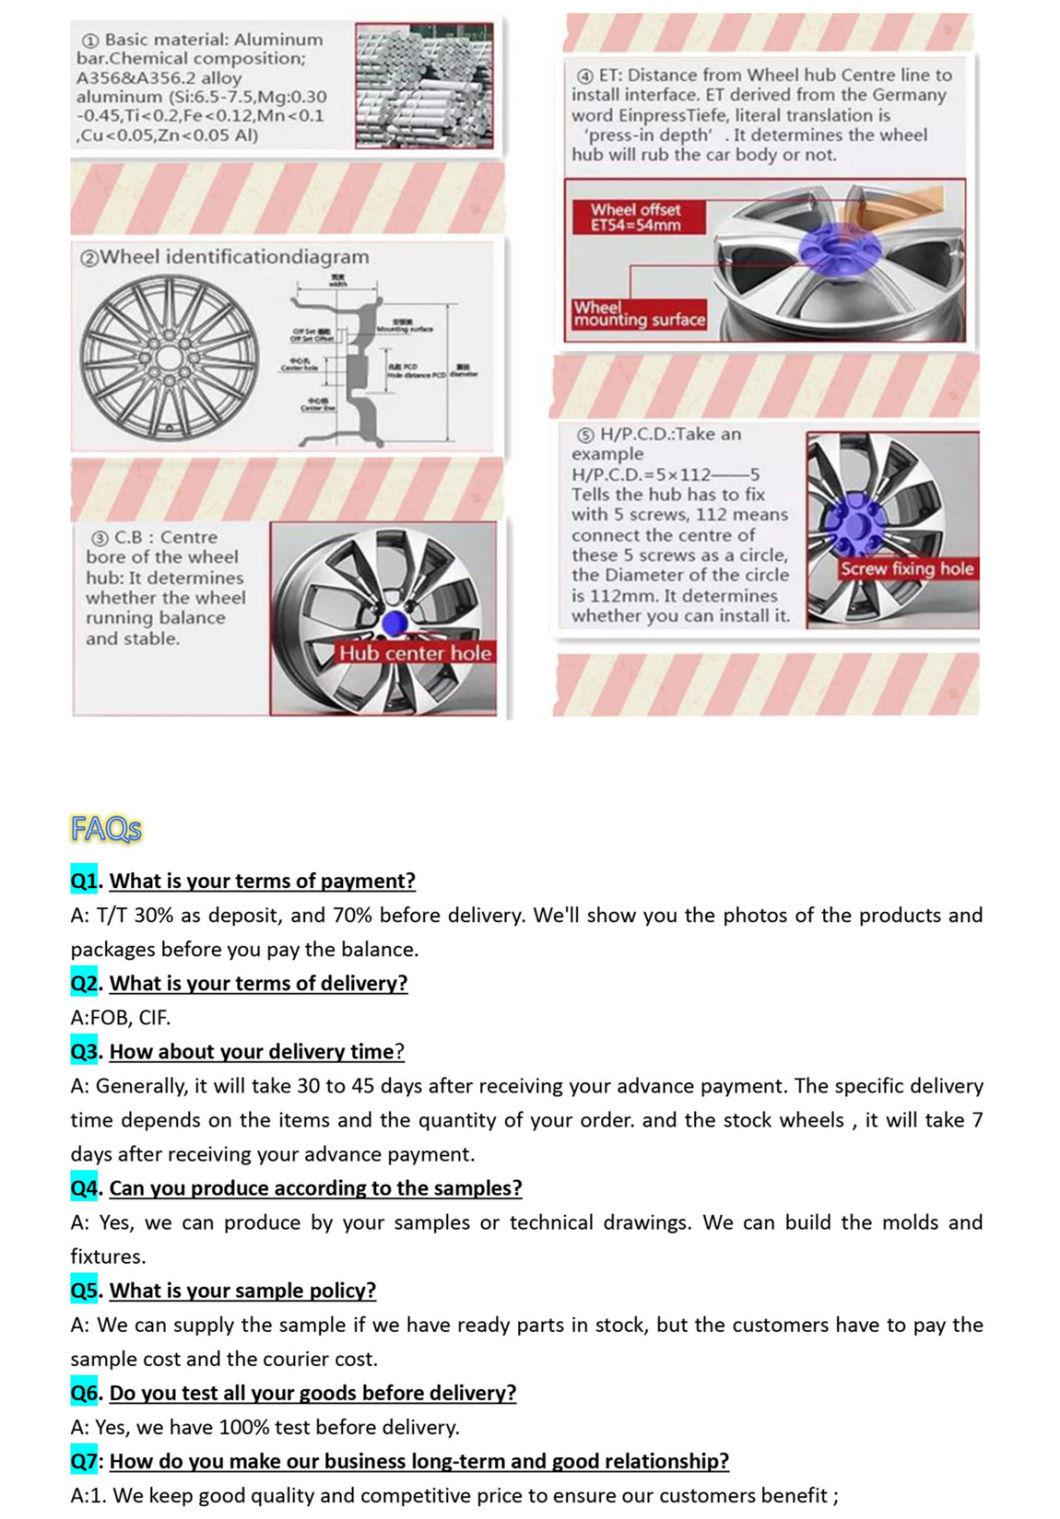 KIA Replica High Quality Alloy Wheel Rims Full Size Current in Stock